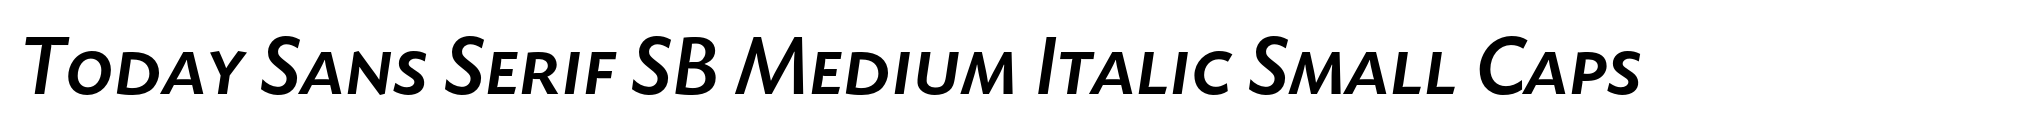 Today Sans Serif SB Medium Italic Small Caps image